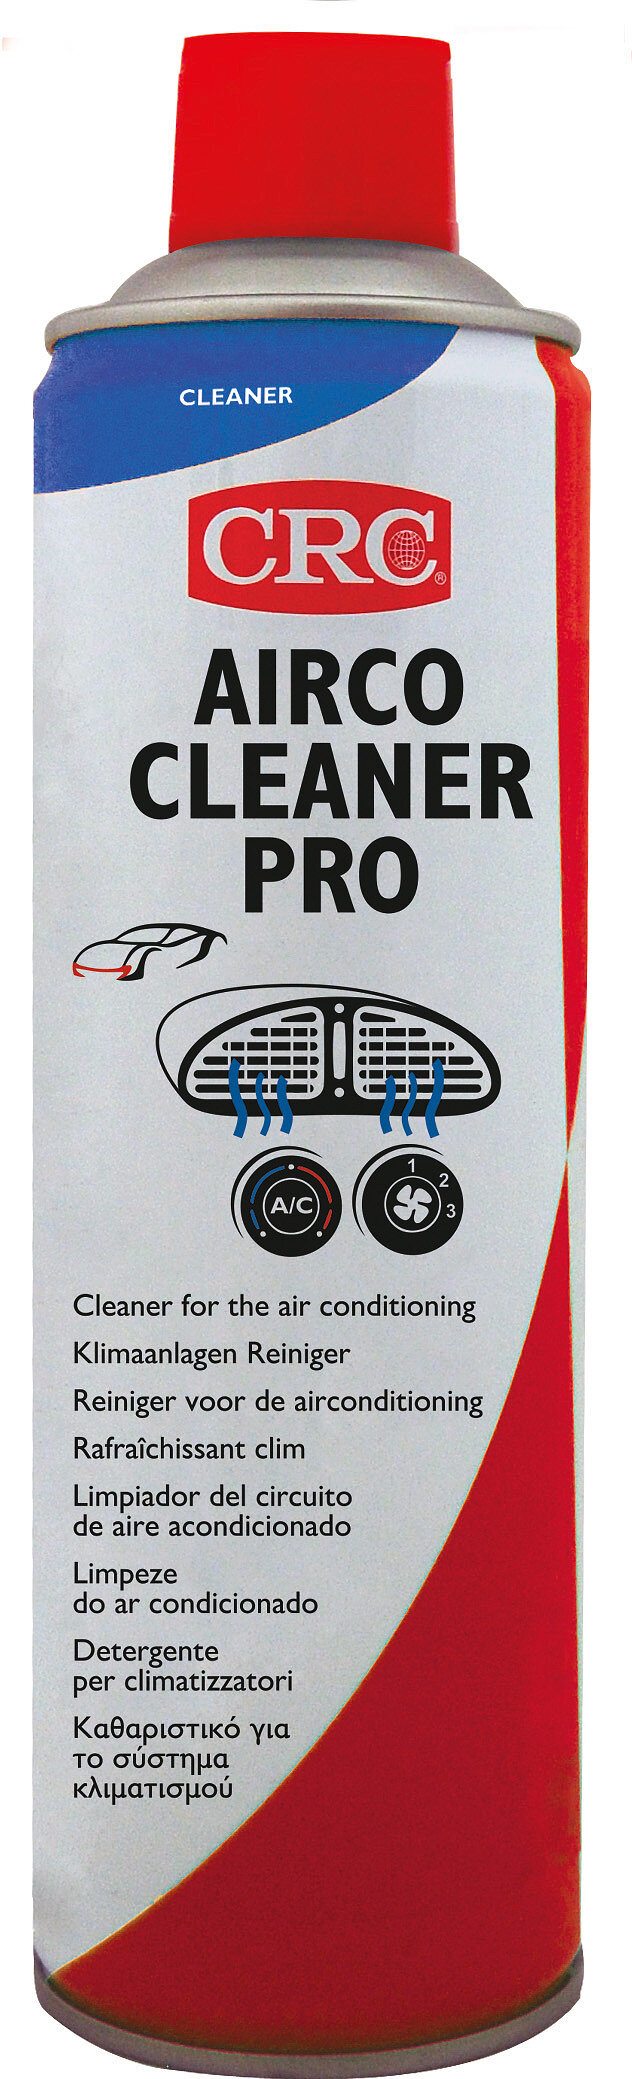 Airco Cleaner Pro, 500 ml, aerosol